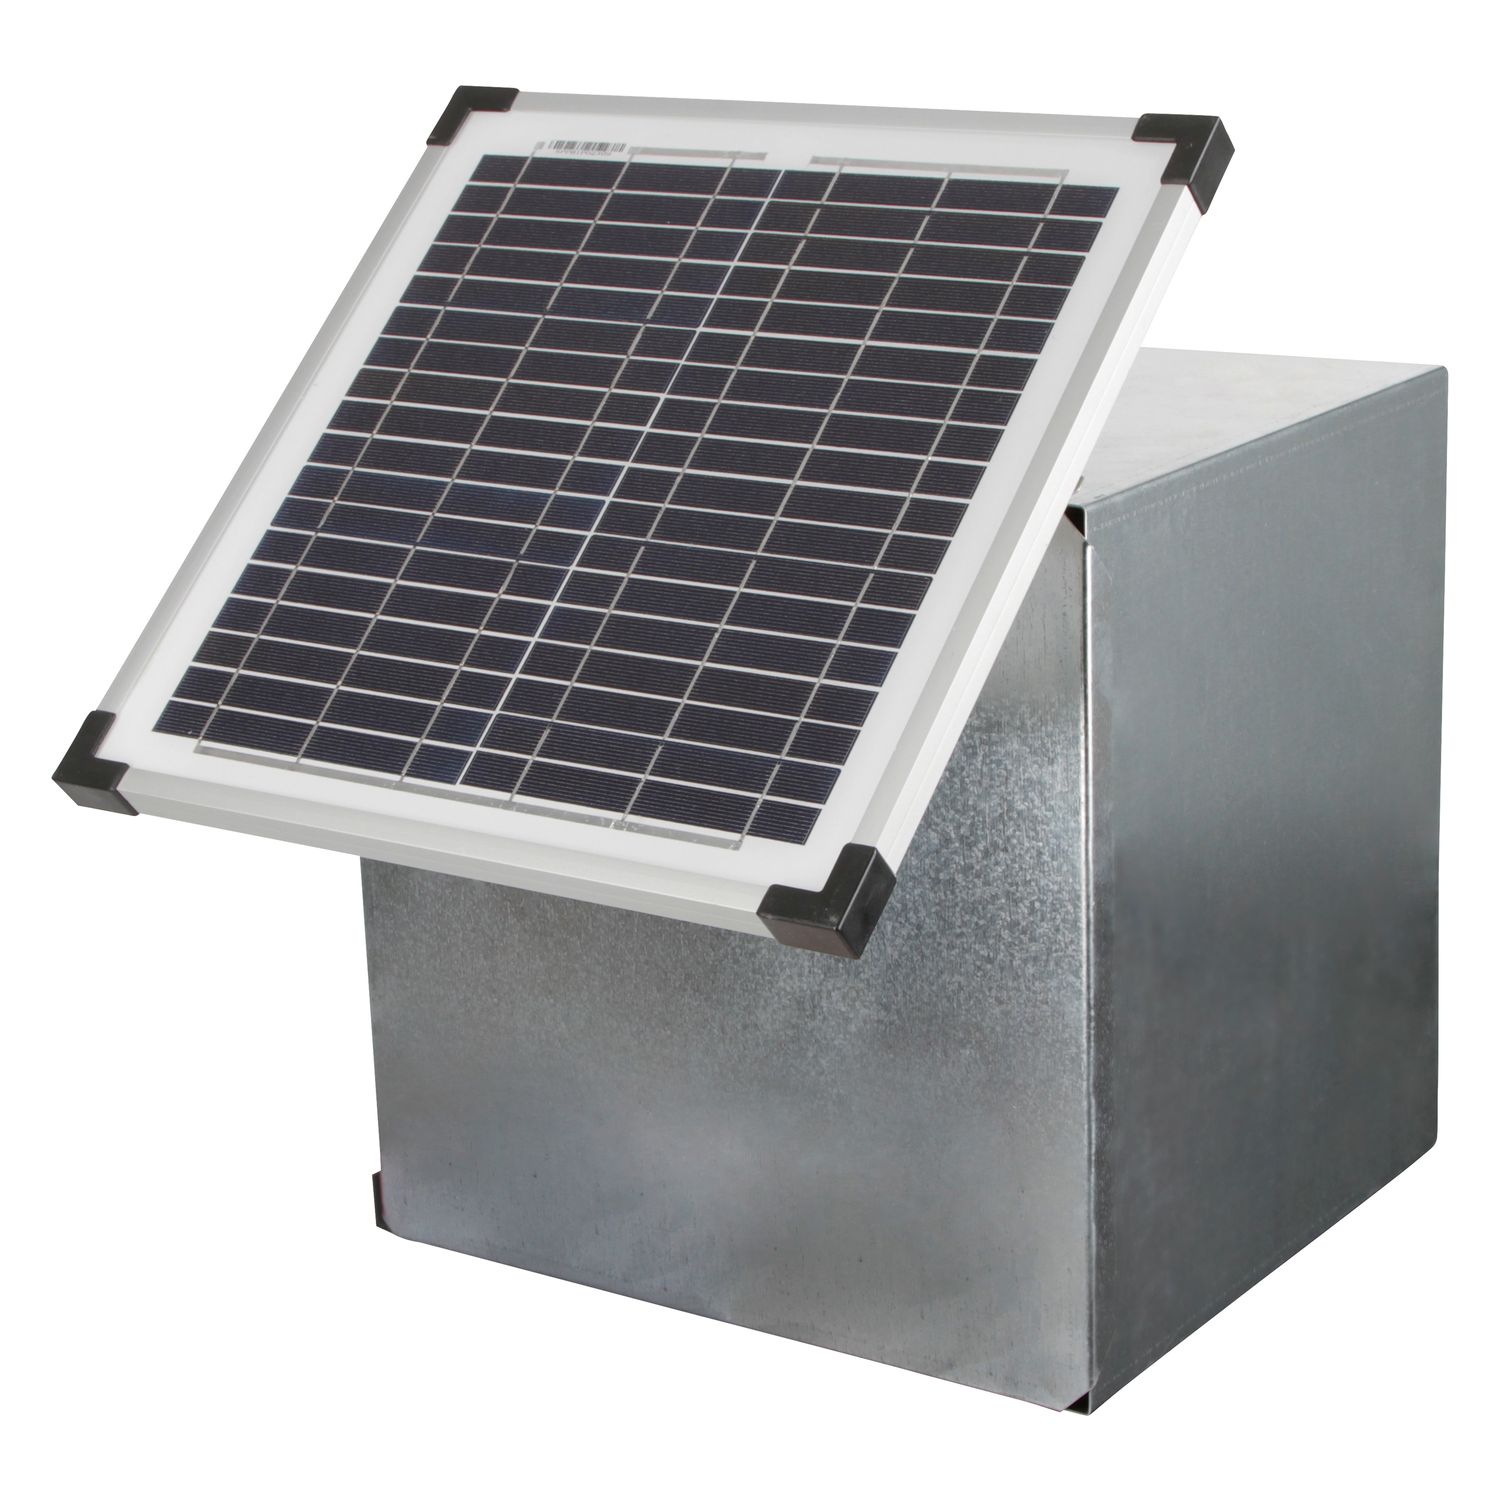 AKO Solarmodul für Kombi Power 1000 